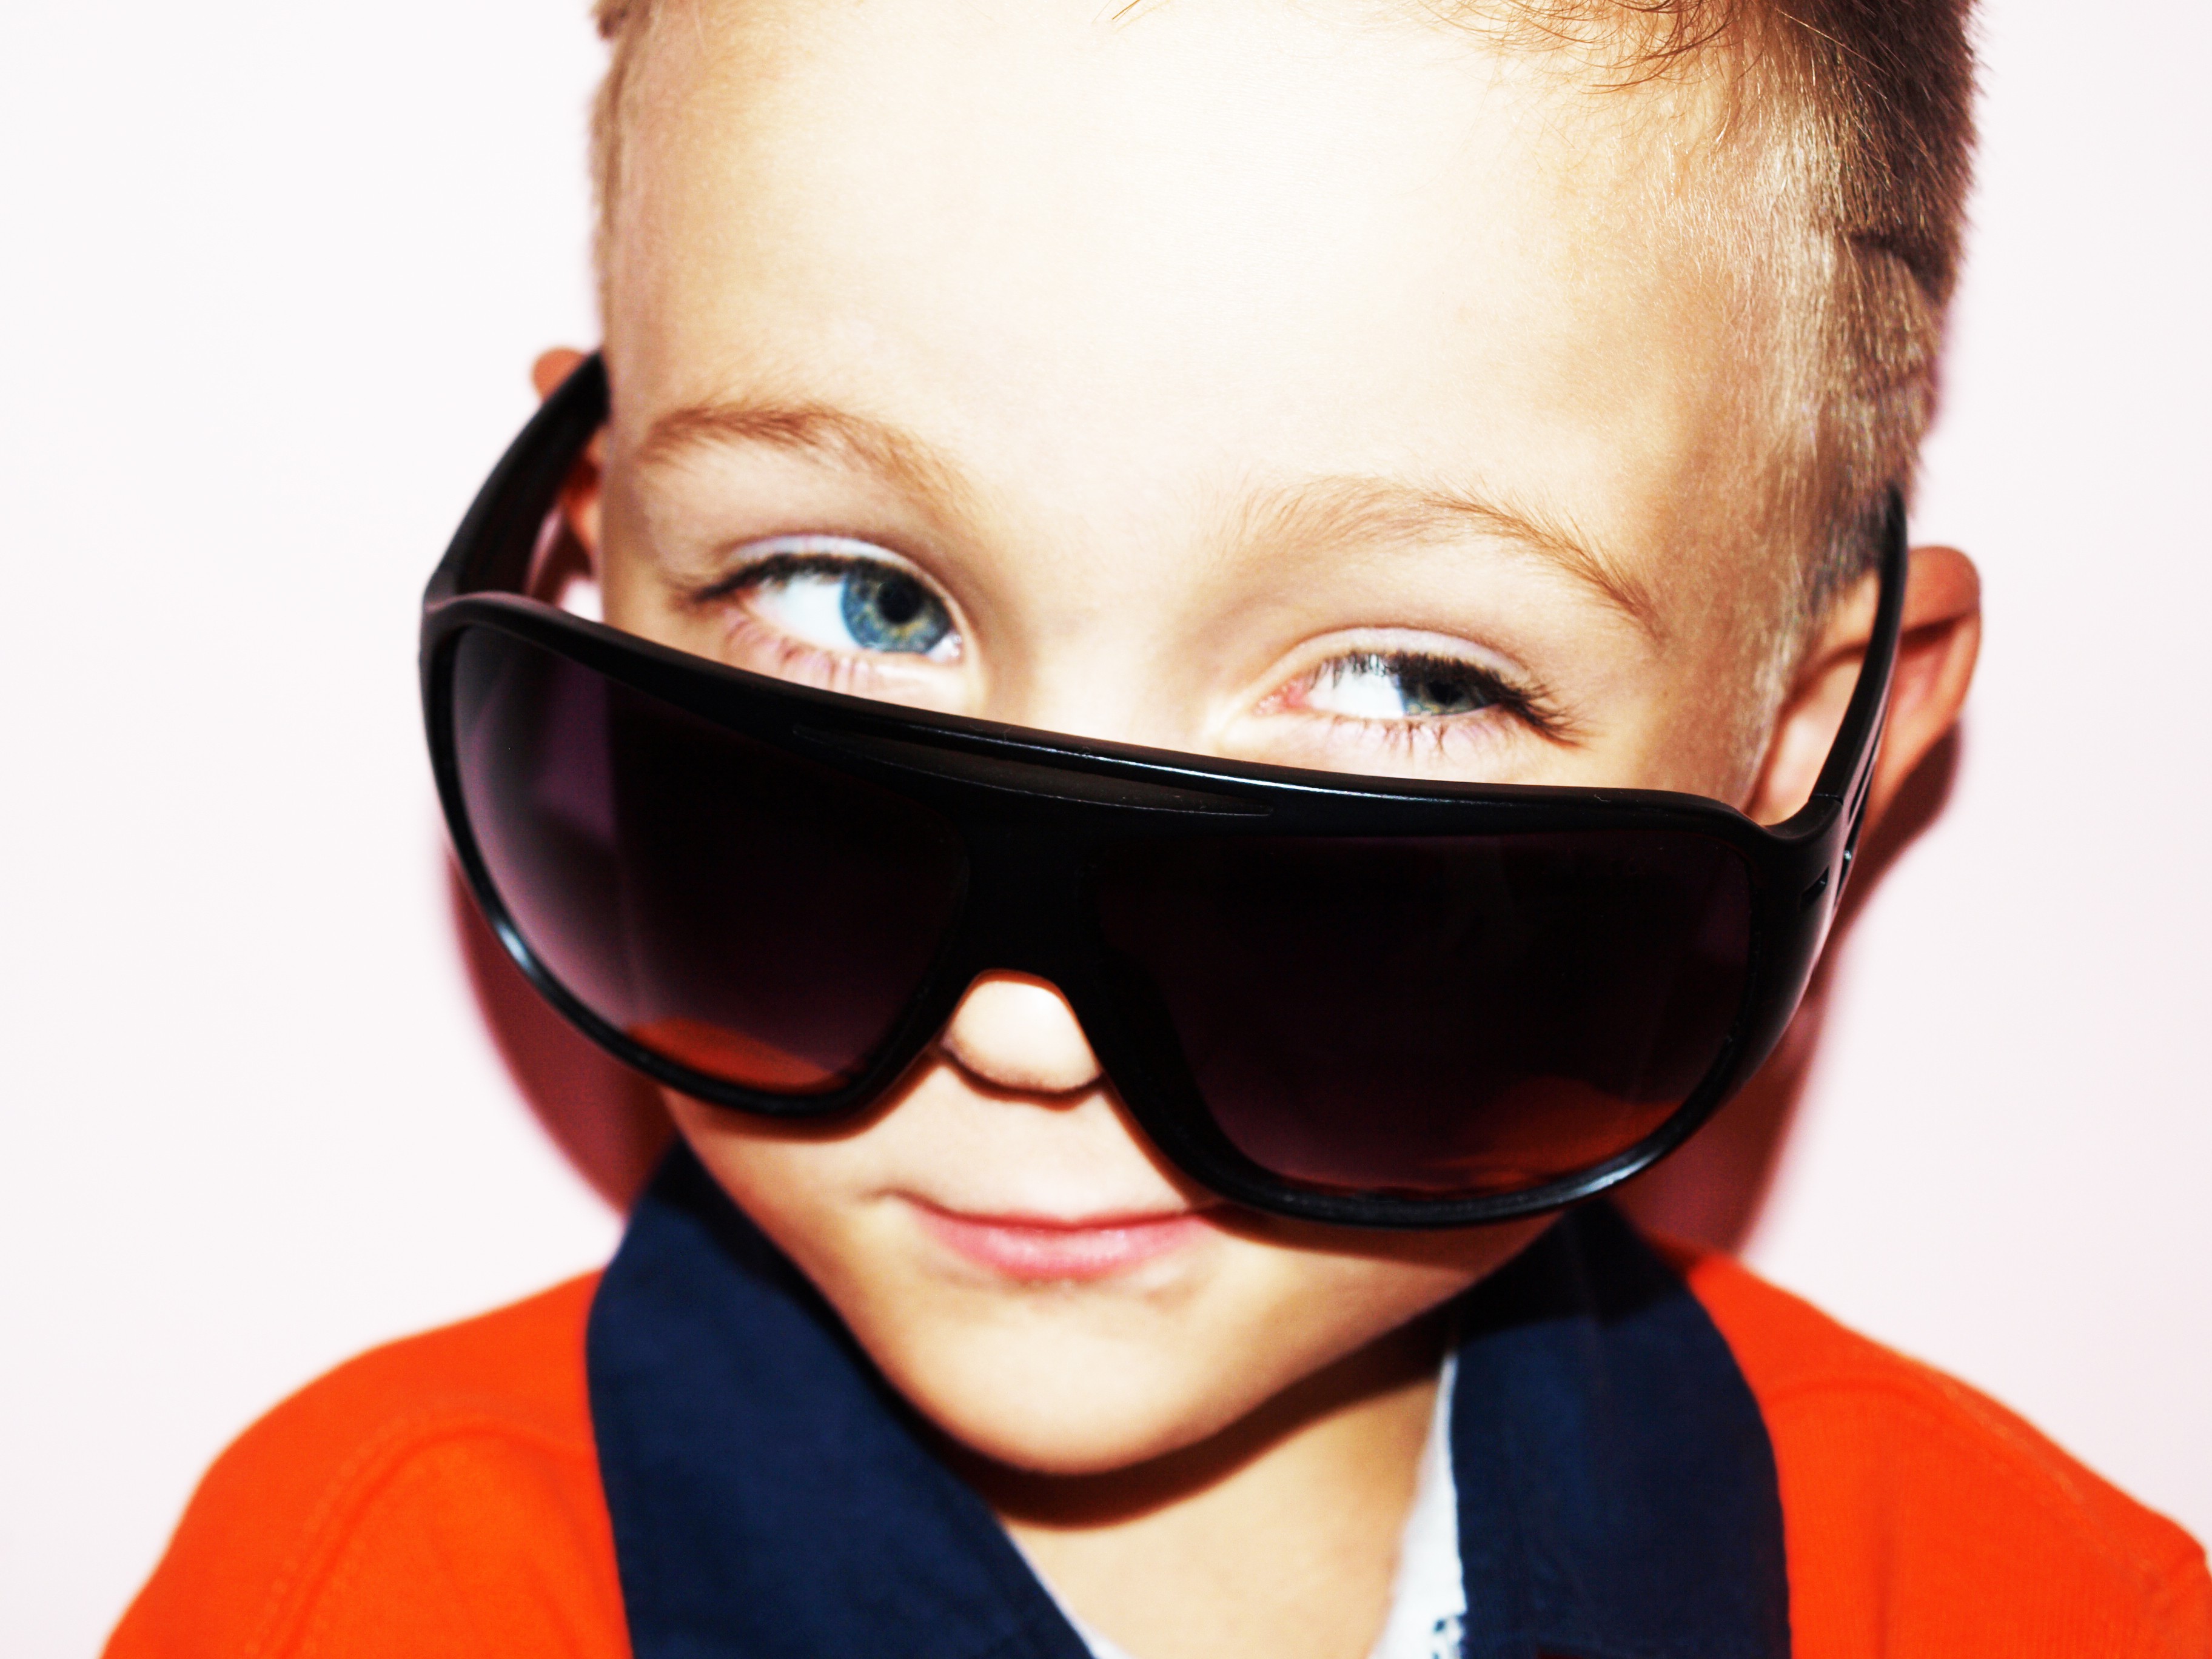 sunglasses, children - desktop wallpaper